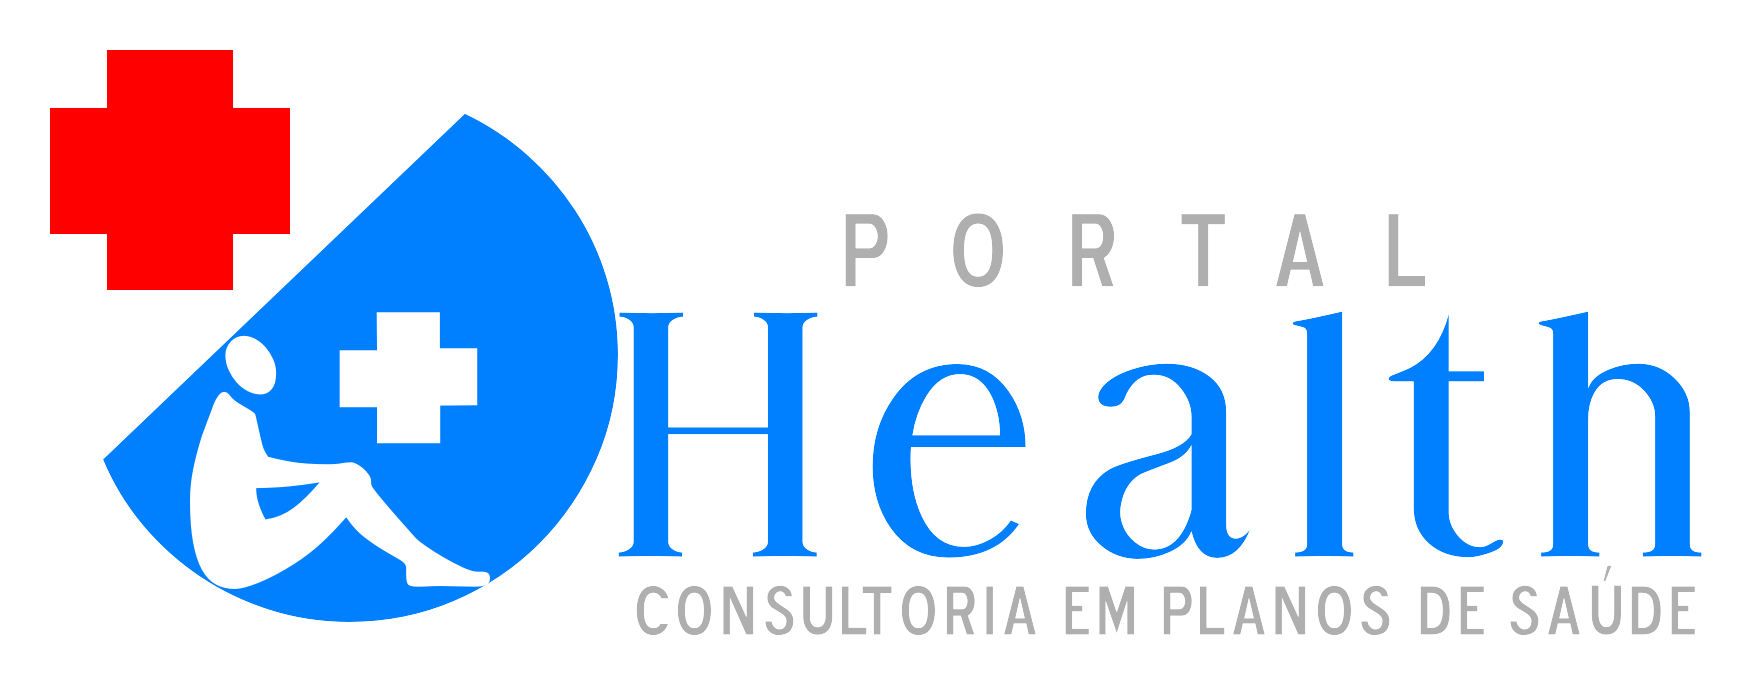 Trasmontano Saúde Logo photo - 1